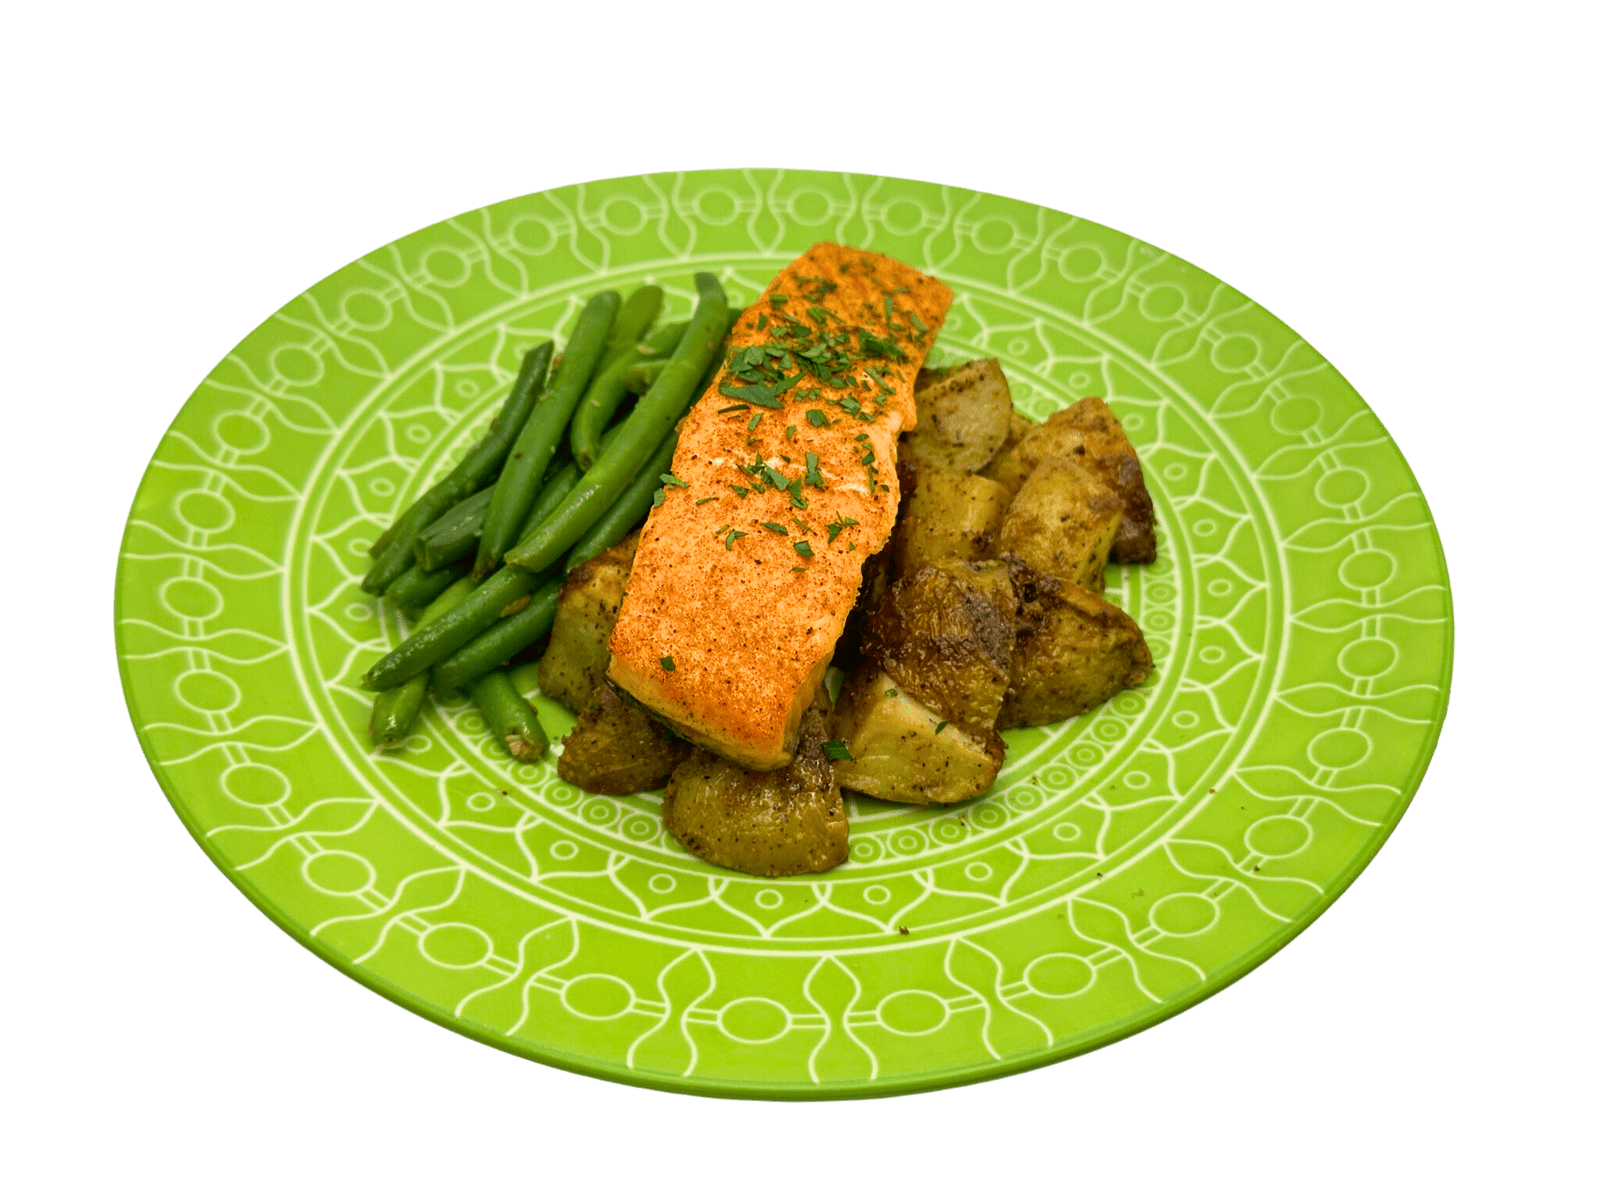 Blackened Salmon with Roasted Yukon Potatoes, Green Beans - Whole Body Fuel